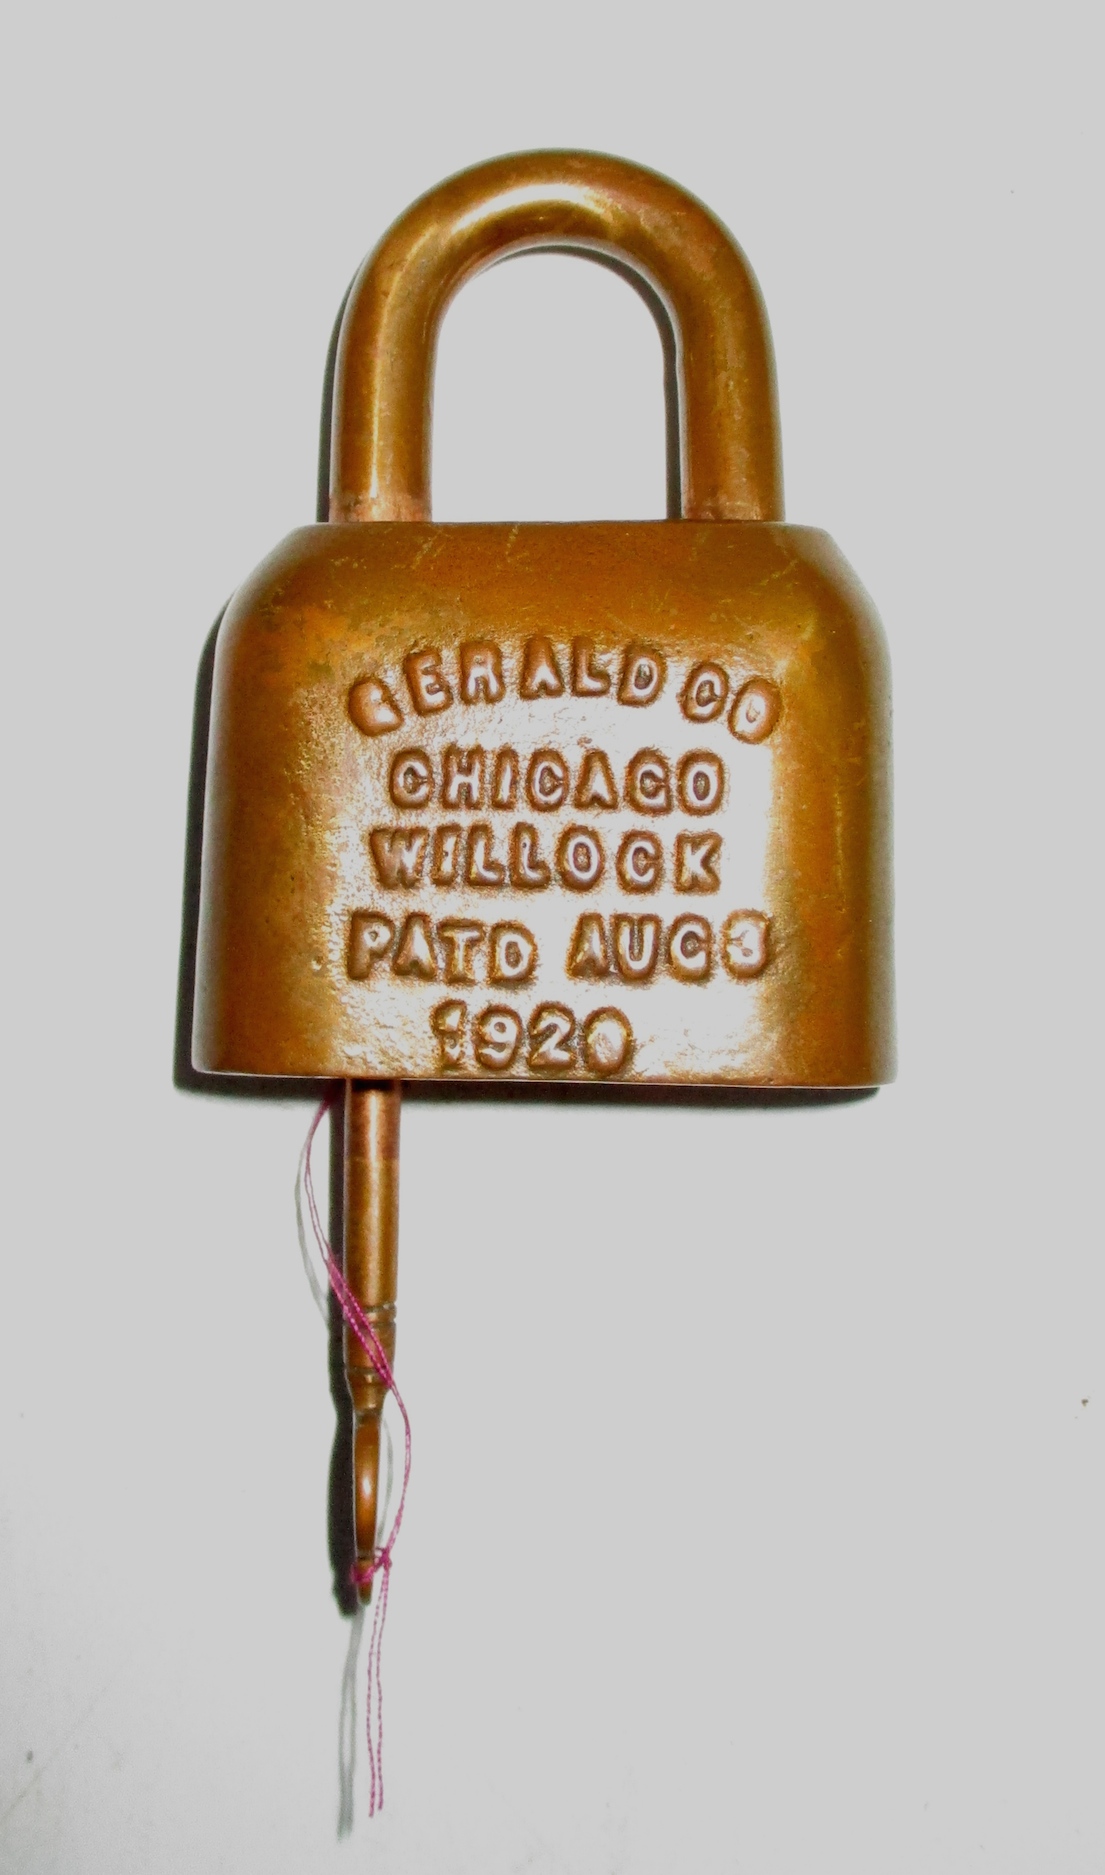 Copper-plated Gerald Co. Lock w/key